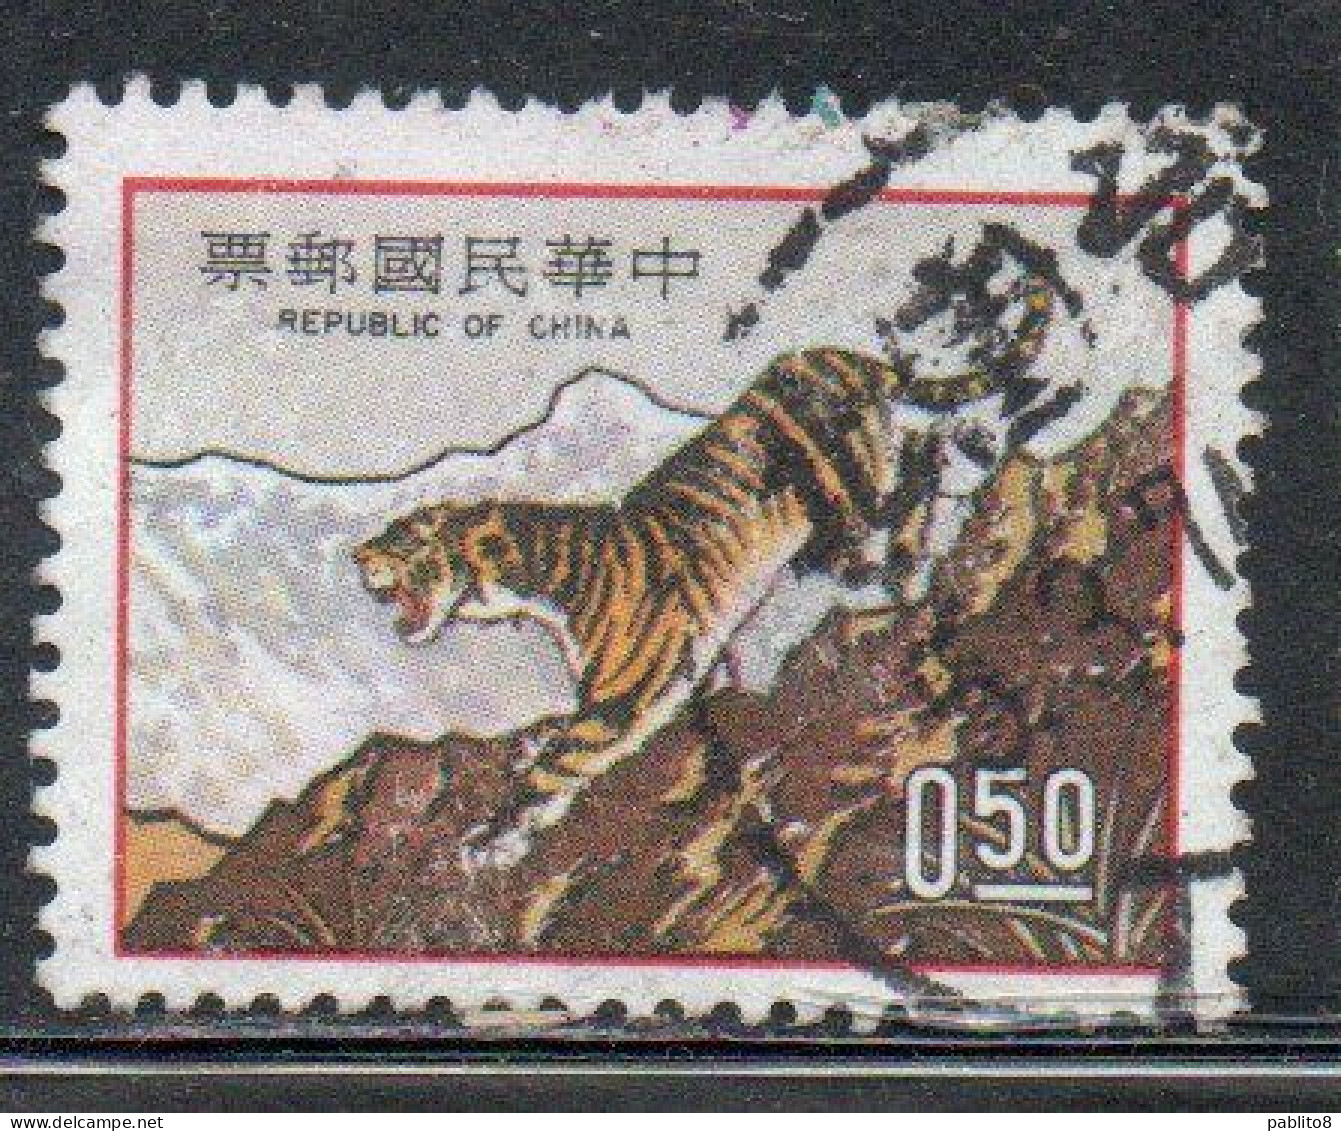 CHINA REPUBLIC CINA TAIWAN FORMOSA 1973 NEW YEAR 1974 TIGER 50c USED USATO OBLITERE' - Usati